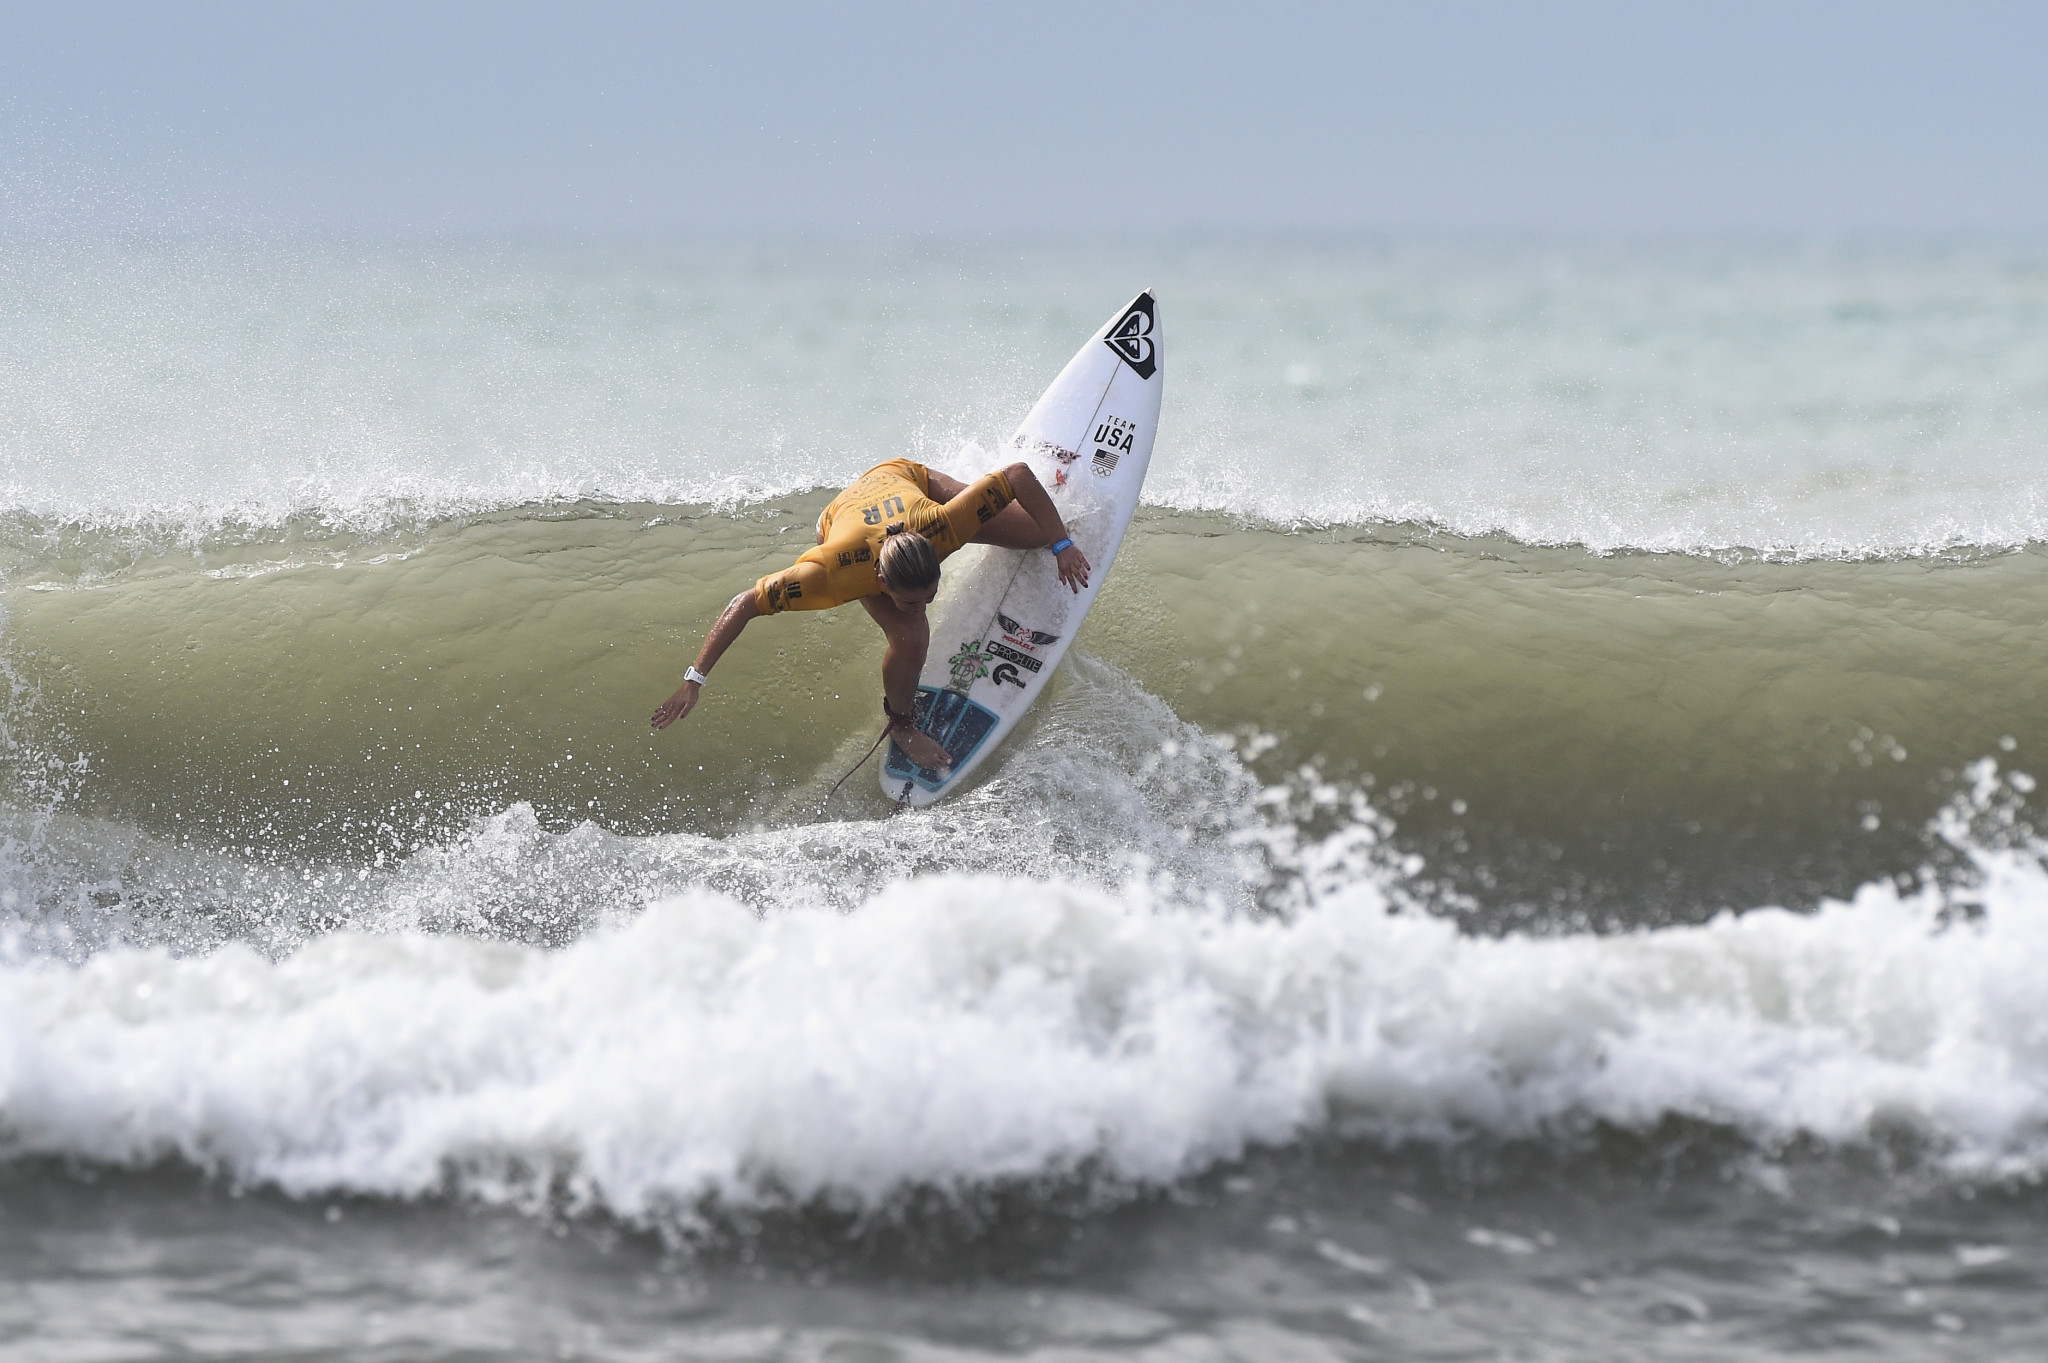 ISA President Fernando Aguerre has praised the World Surfing Games held in Tahara, Japan ©Getty Images